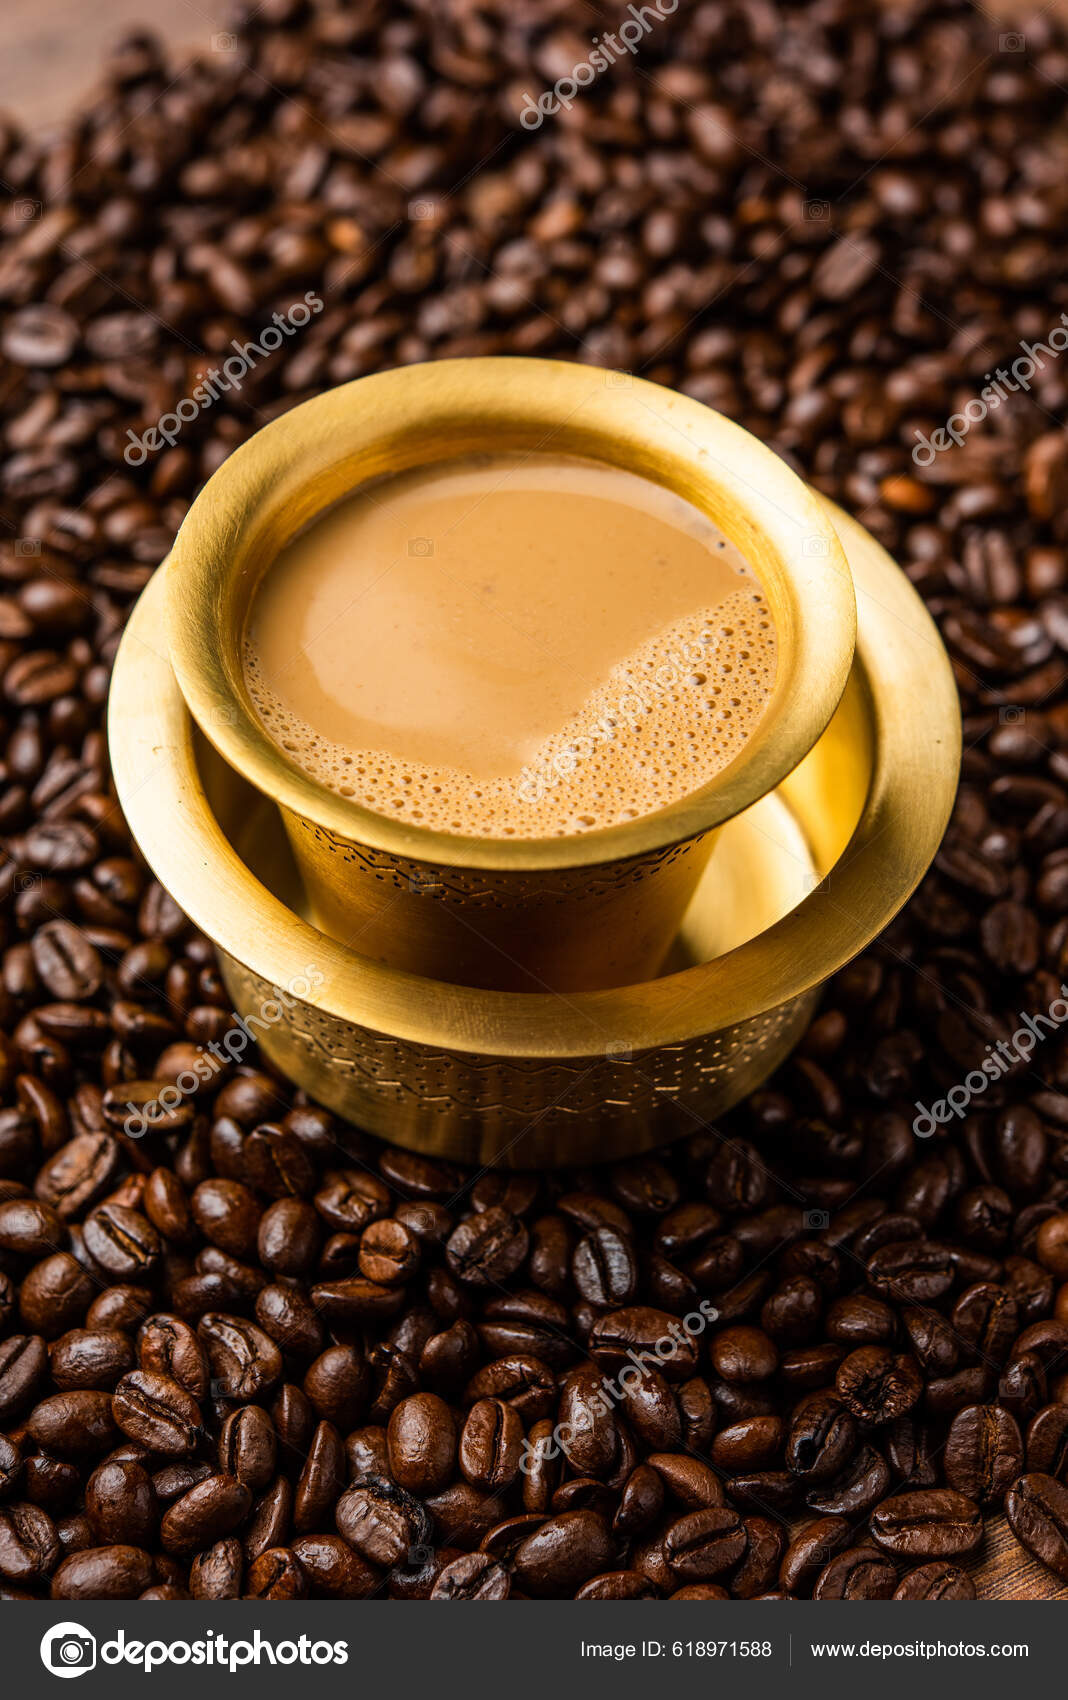 https://st5.depositphotos.com/5653638/61897/i/1600/depositphotos_618971588-stock-photo-south-indian-filter-coffee-served.jpg